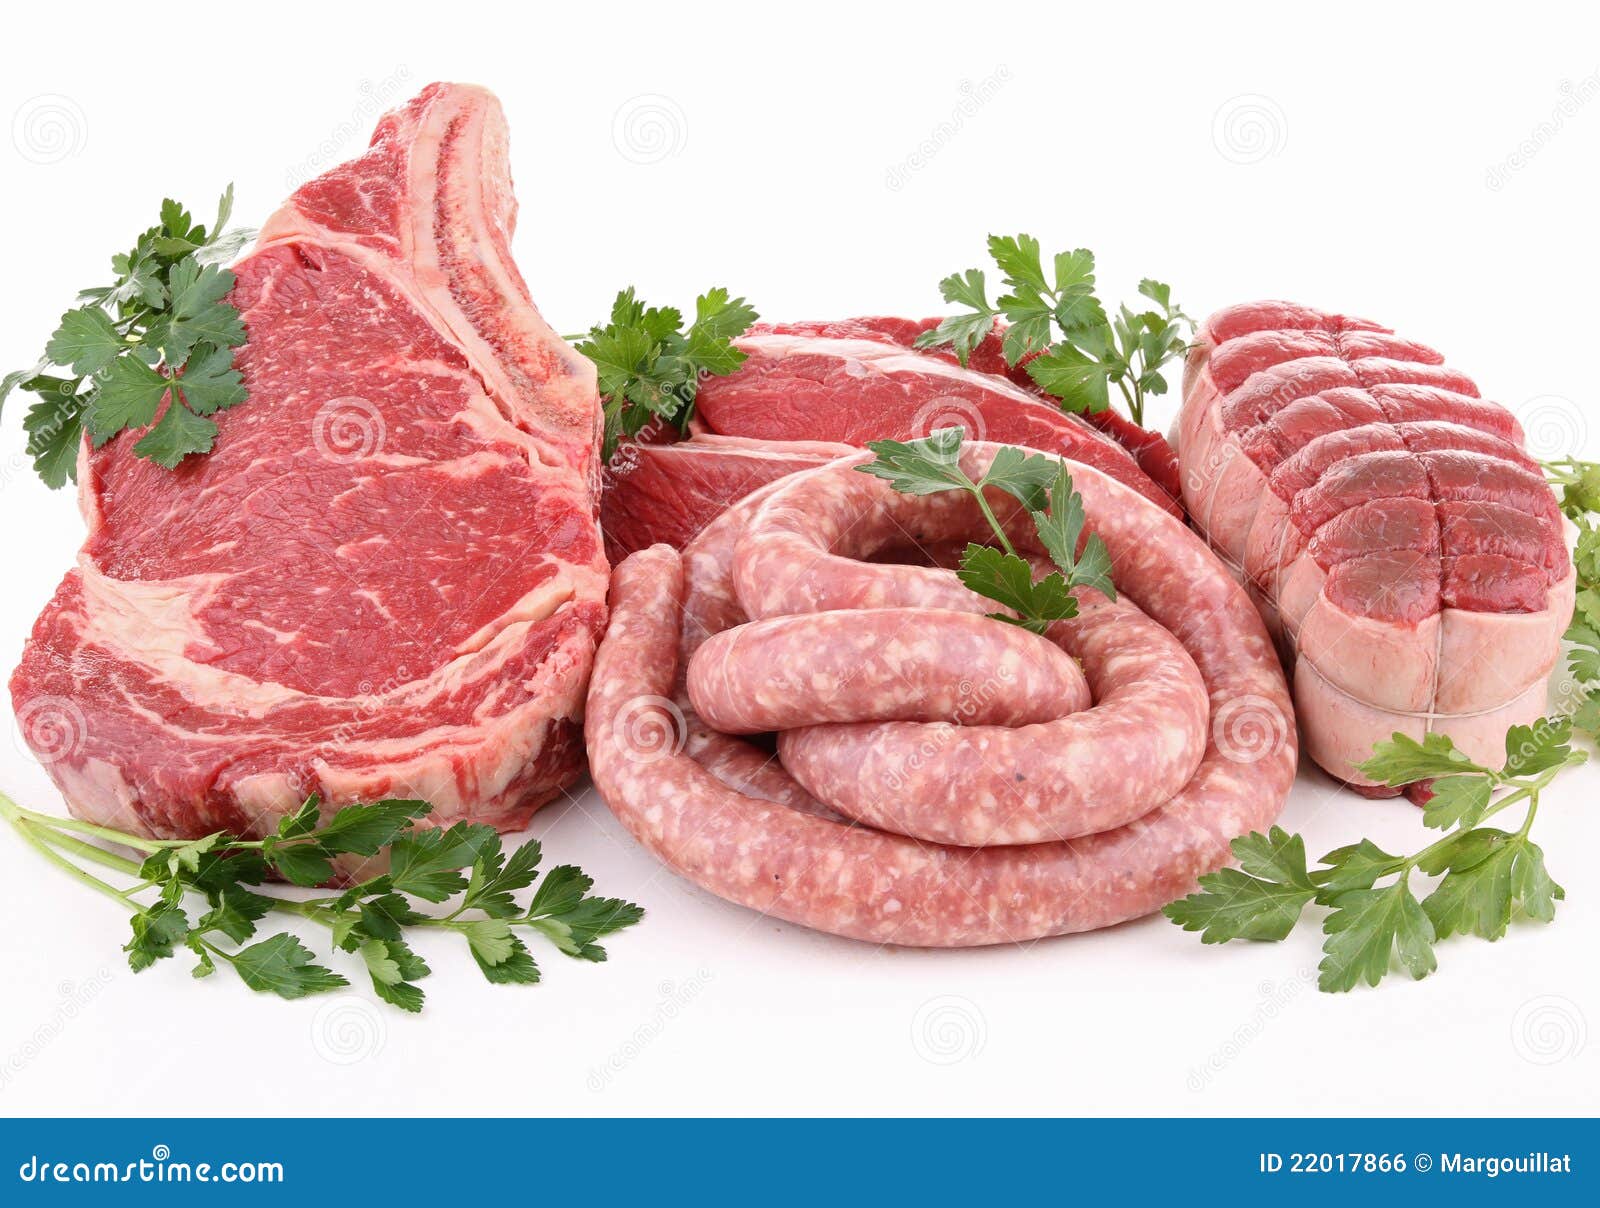  raw meats